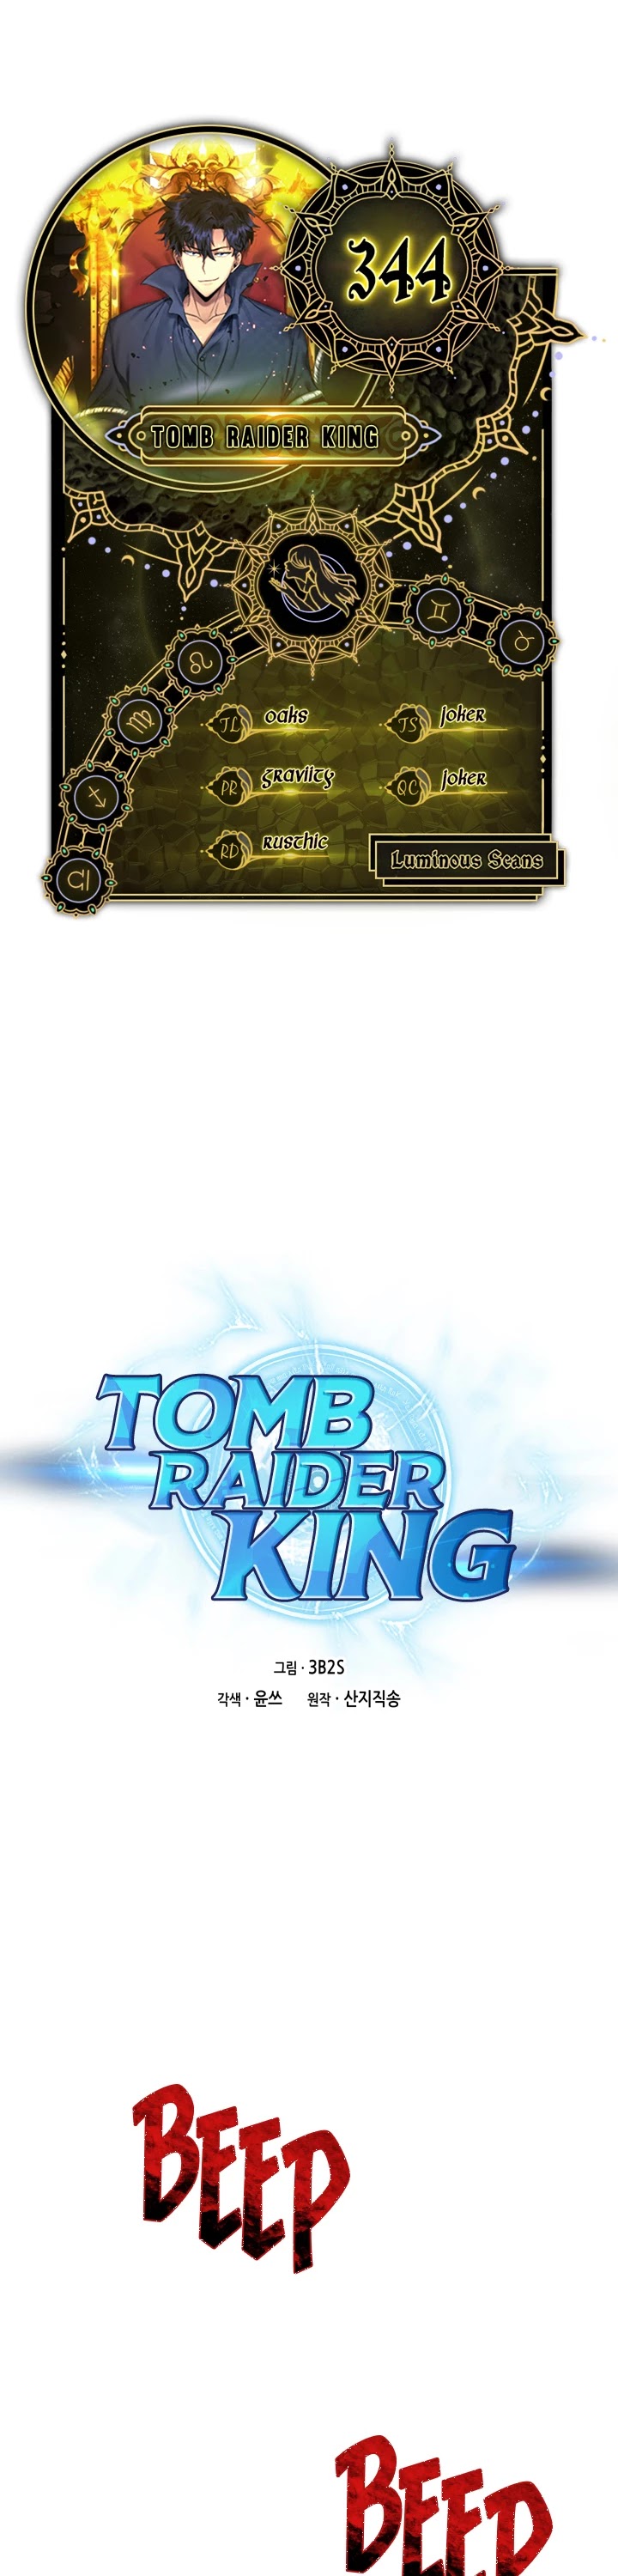 Tomb Raider King - Page 1